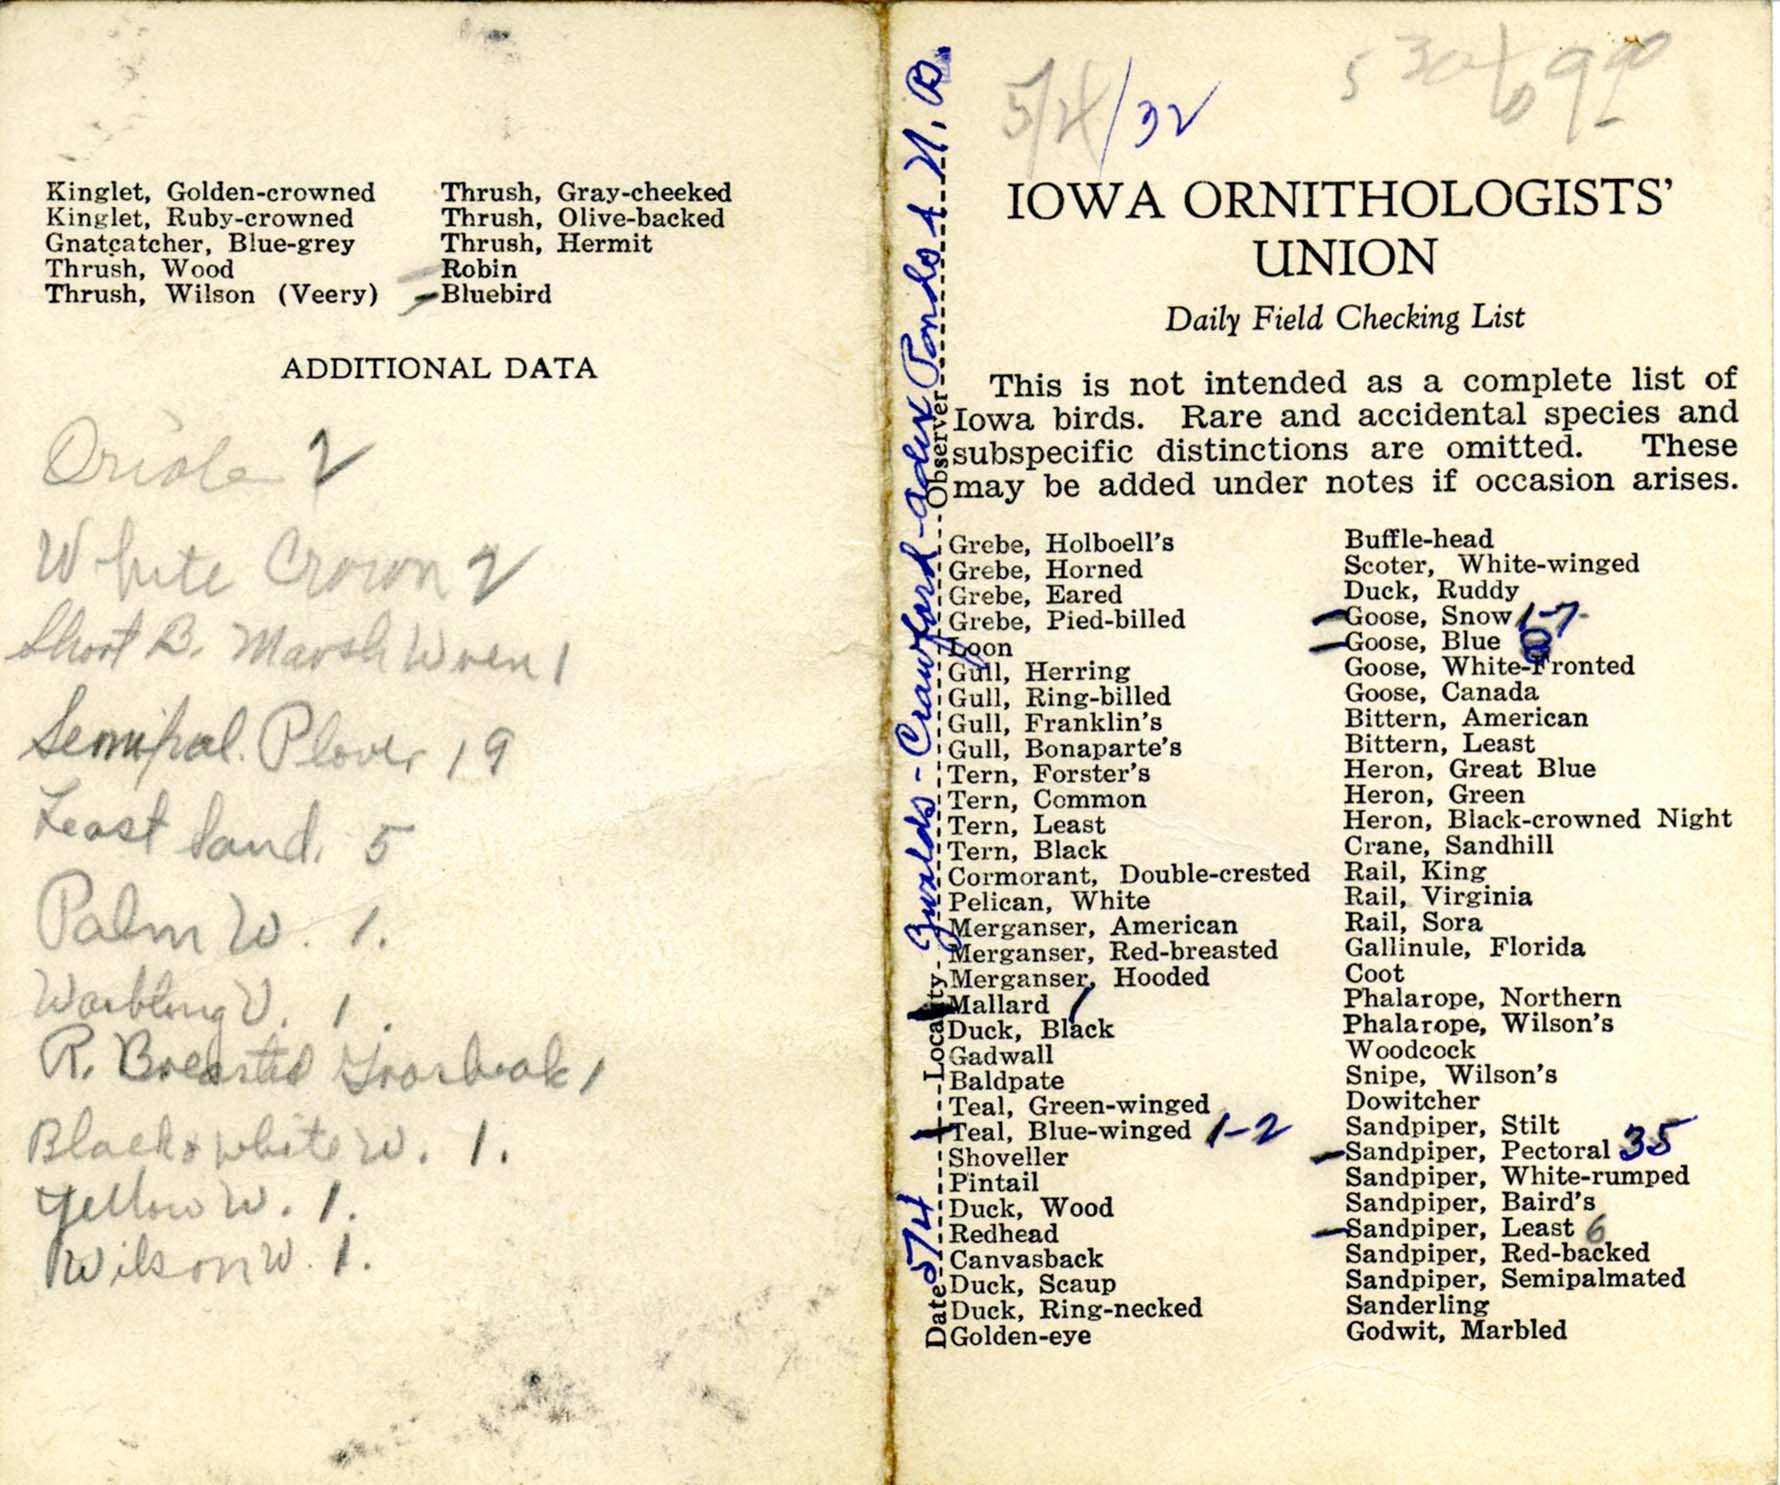 Daily field checking list, Walter Rosene, May 4, 1932